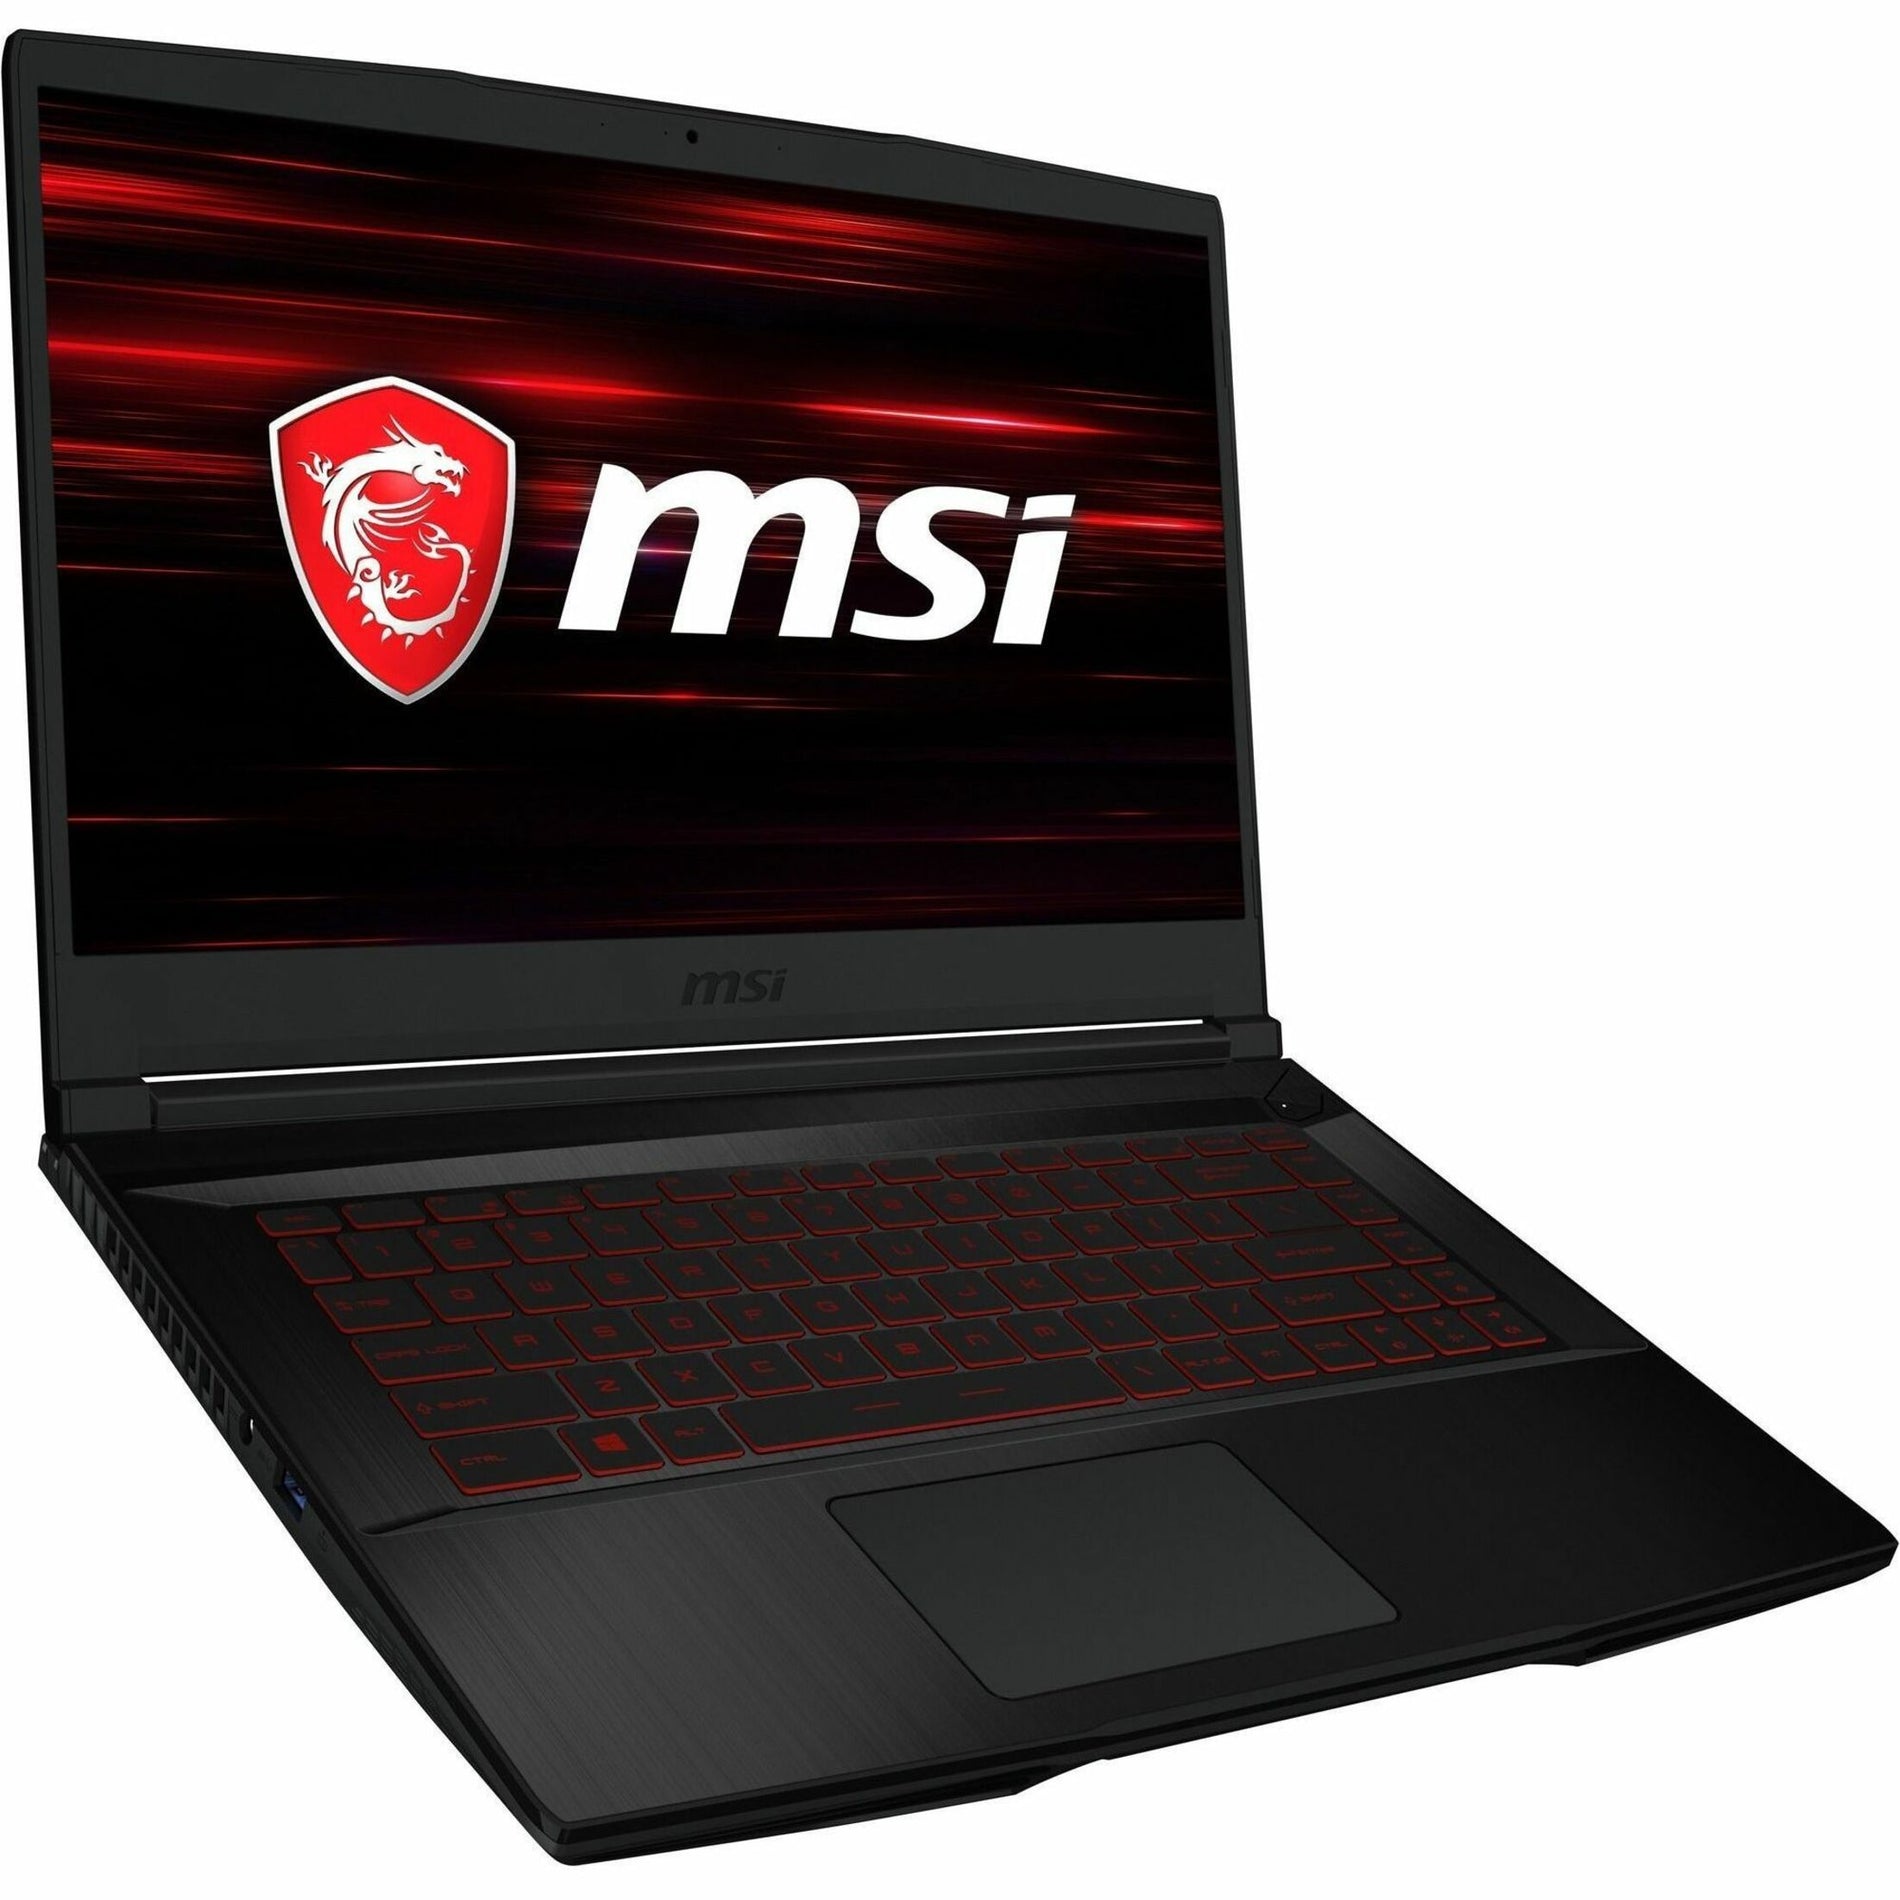 MSI GF63 THIN GF63111424 Gaming Notebook - 15.6" Full HD, Intel Core i5 11th Gen, 8GB RAM, 512GB SSD, Black